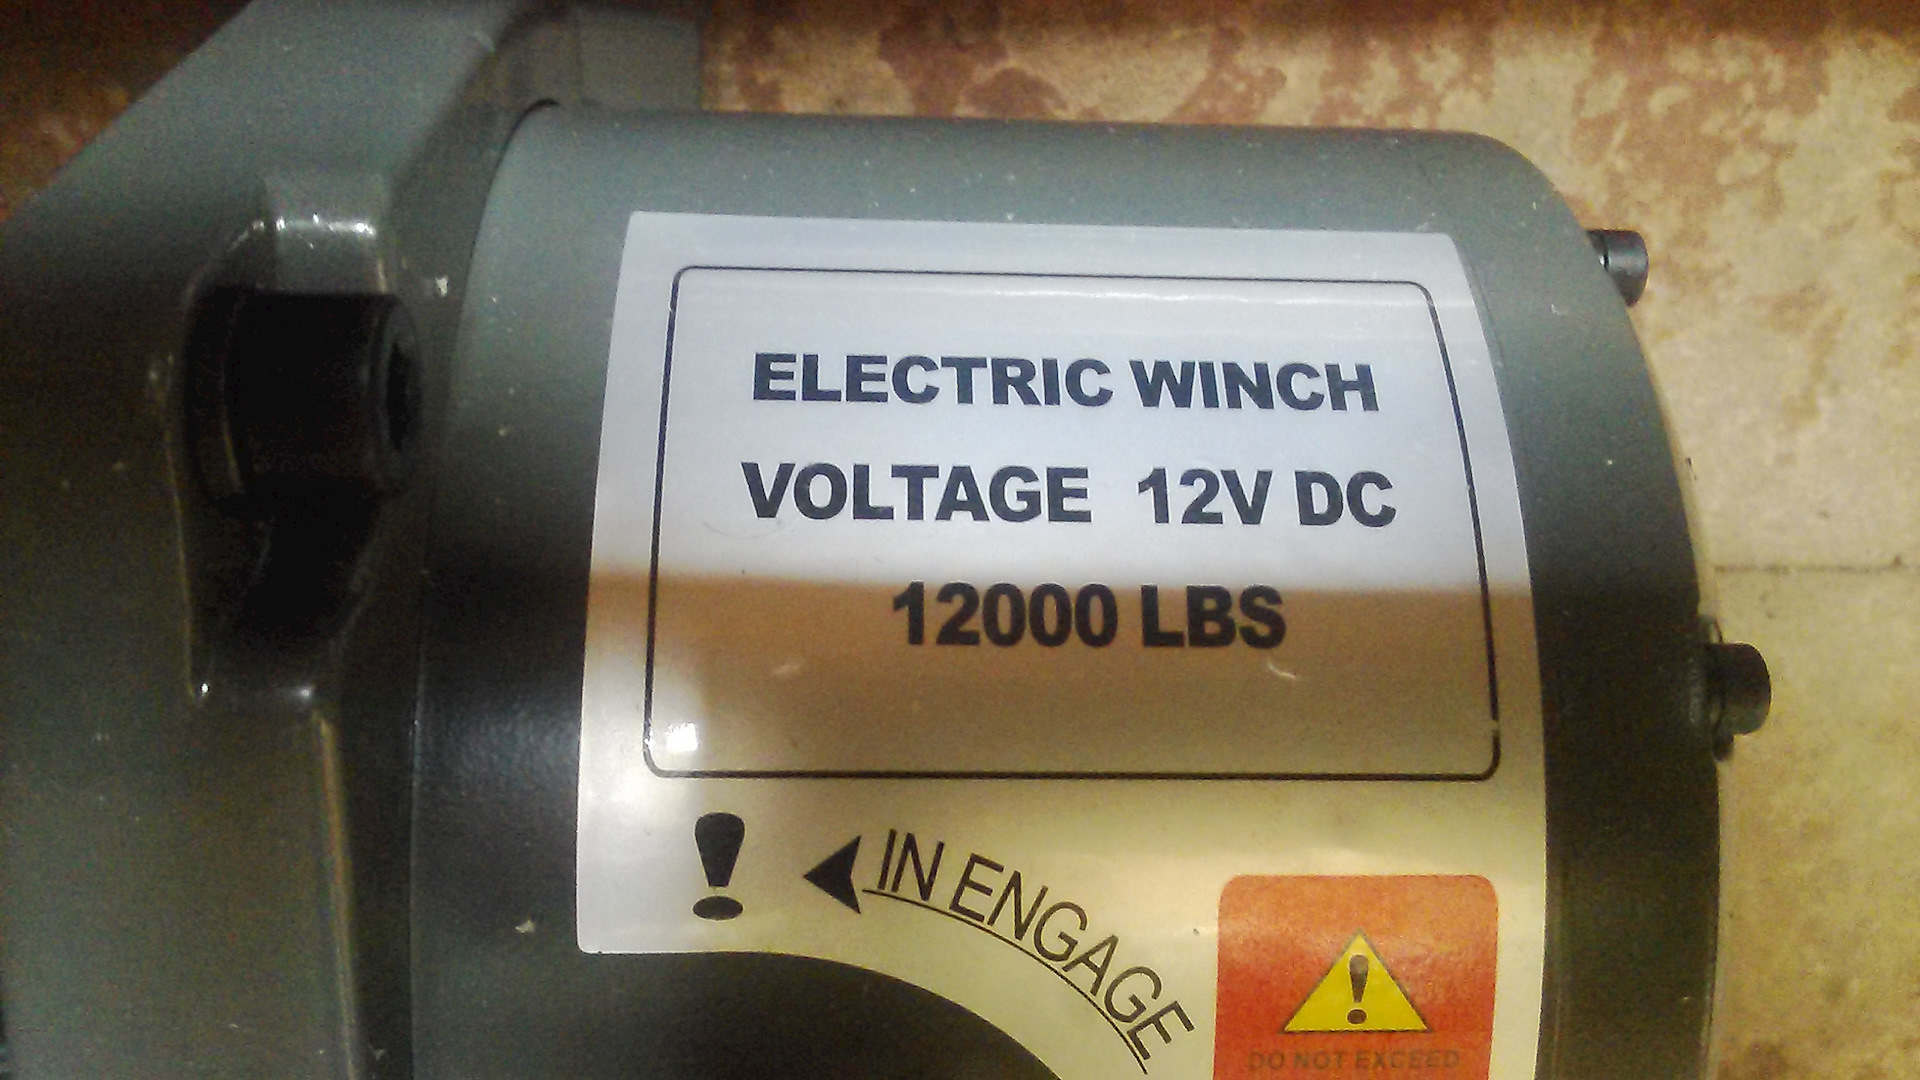 Voltage 12v. Electric winch runningman 12000. Winch 12000lbs брелок. Лебедка Electric winch Voltage 12vdc 12000lbc.. Electric winch Voltage 24v DC 2.0X.